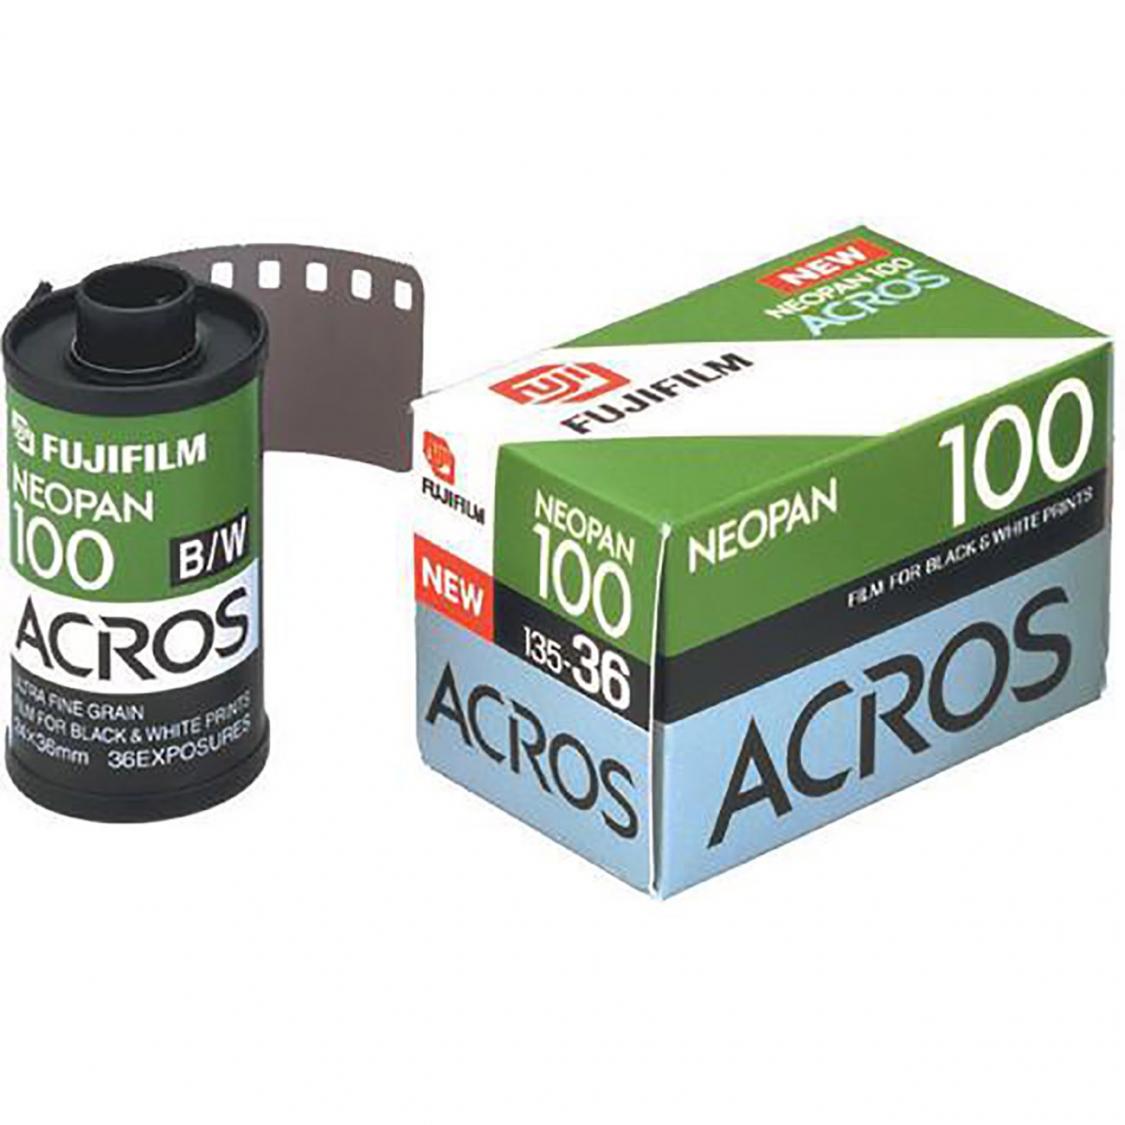 Fujifilm Neopan Acros 100 II 135-36 Exposure 